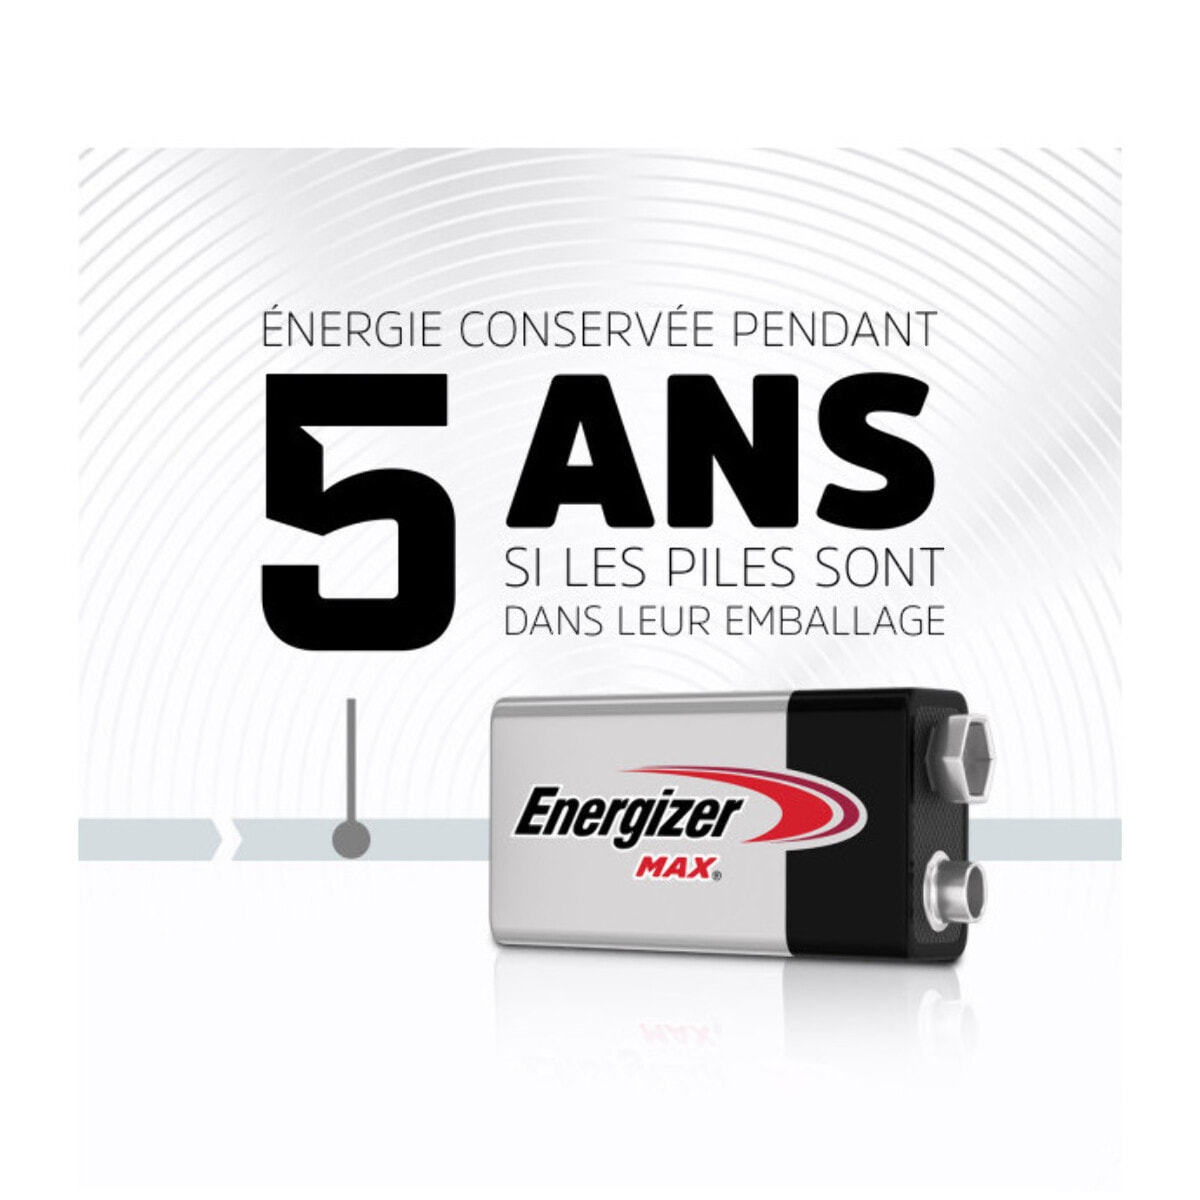 Pack de 3 - Energizer Max Alcaline 9V, pack de 2 Piles